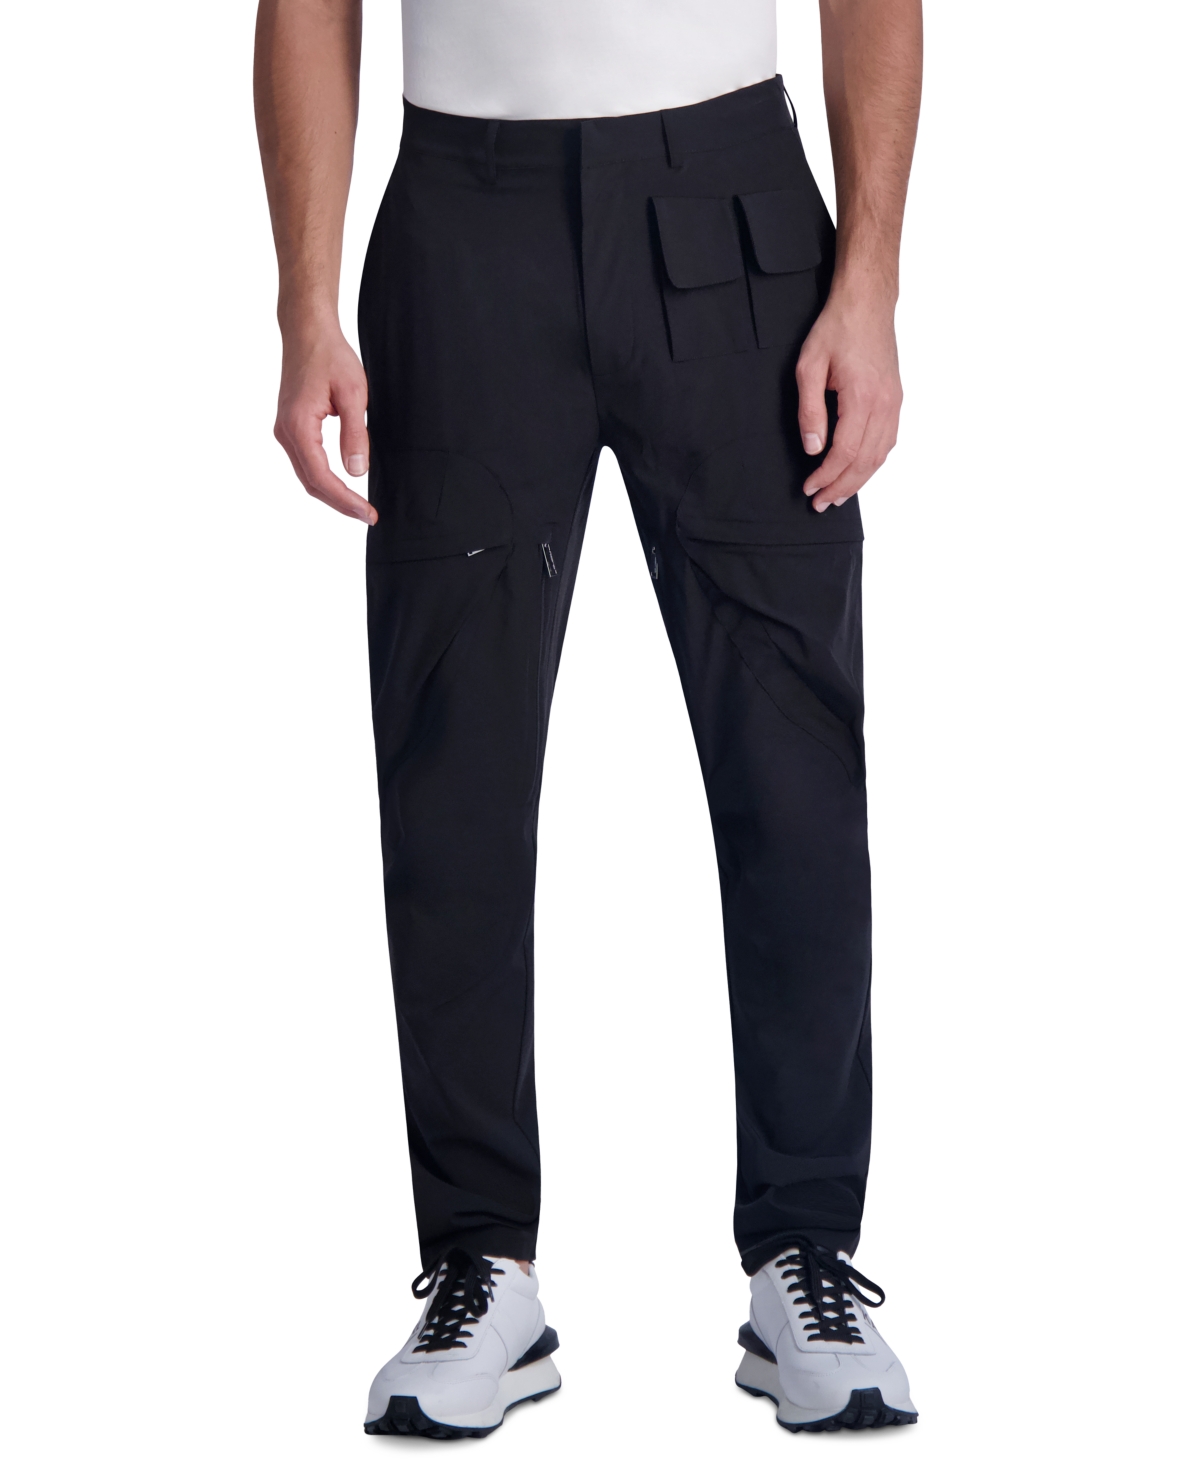 Men's Slim Fit Cargo Pants - Black